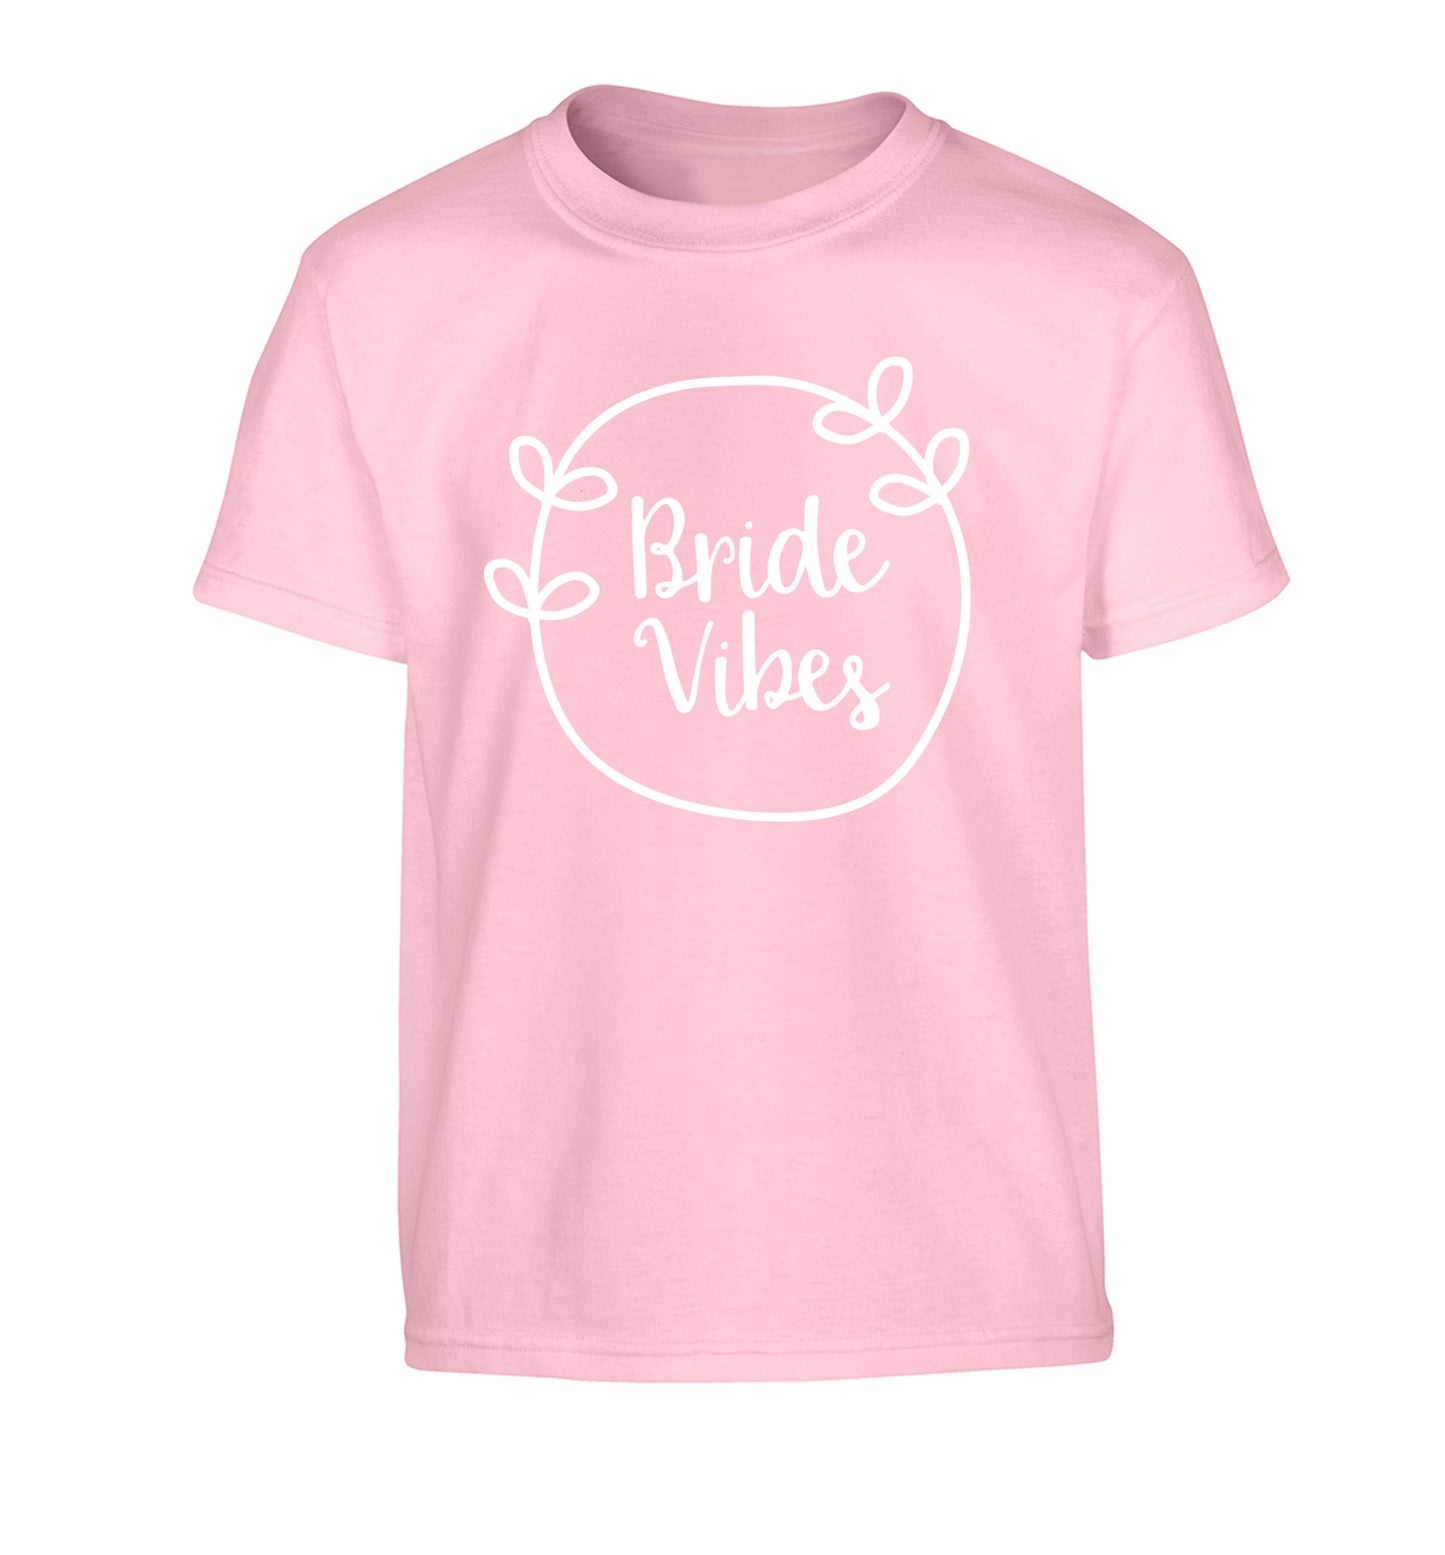 Bride Vibes Children's light pink Tshirt 12-13 Years